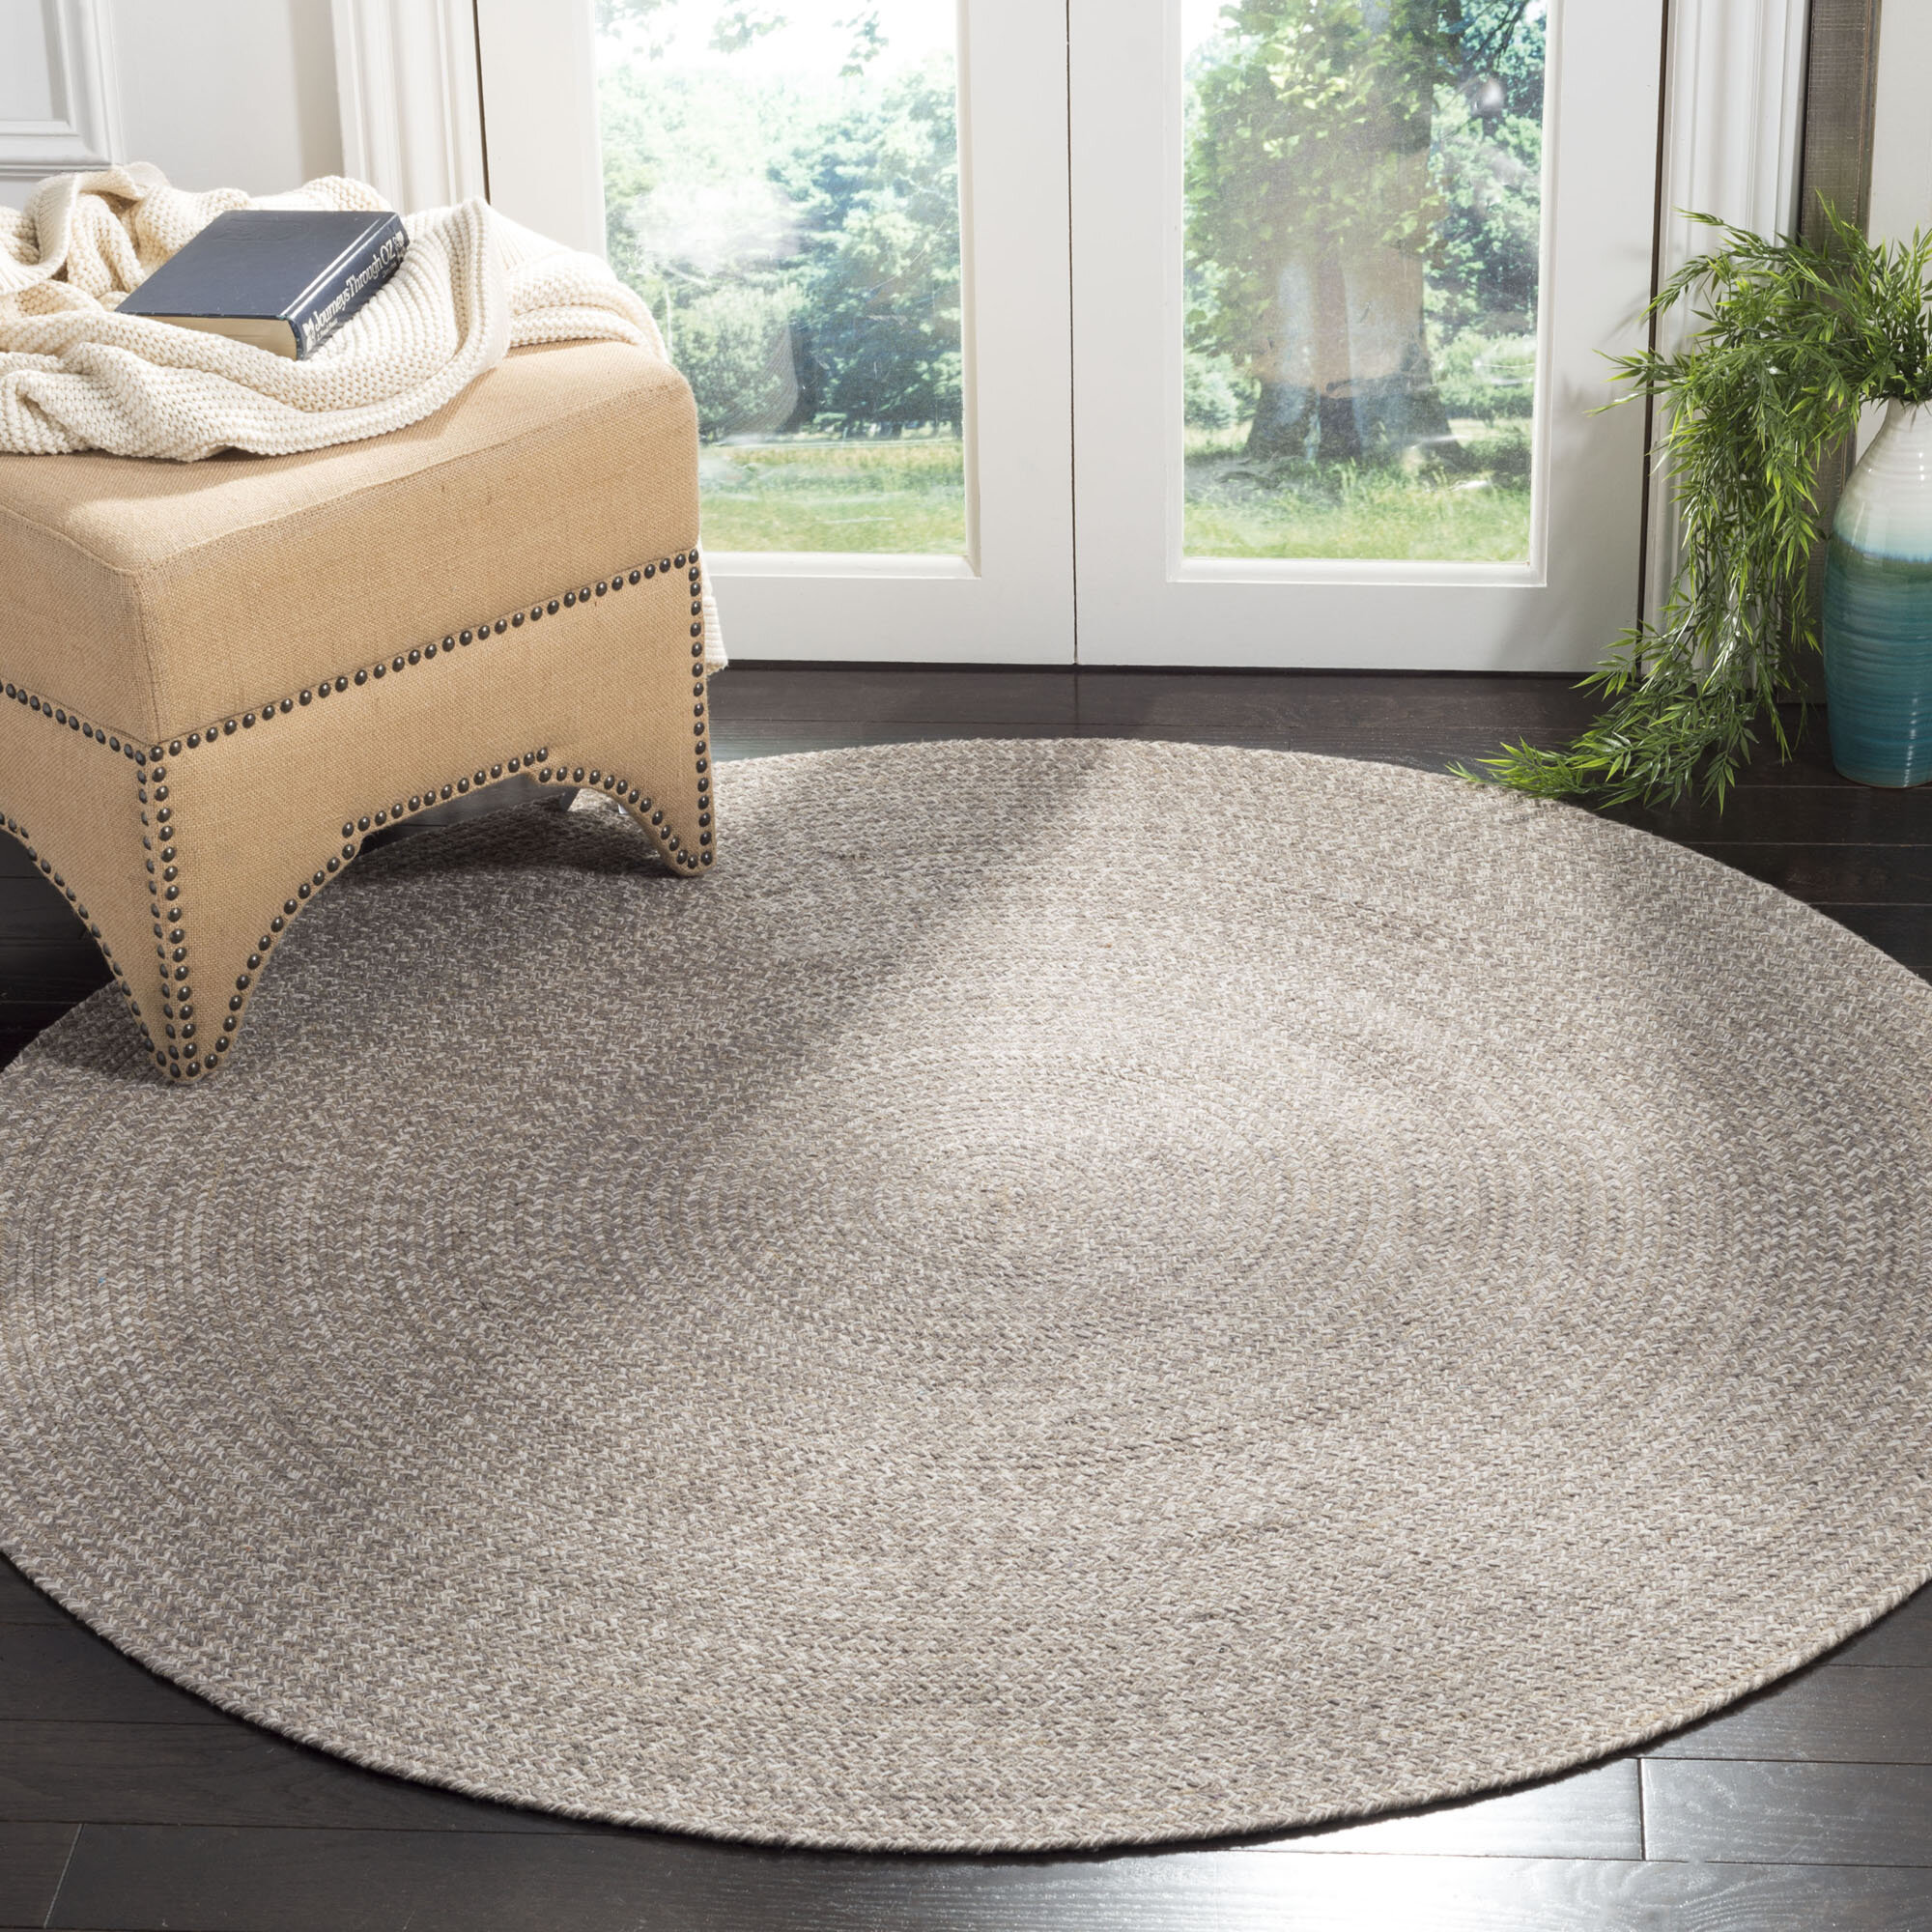 Braided Rug Carpet Round Area Rug Natural 100% cotton Farmhouse